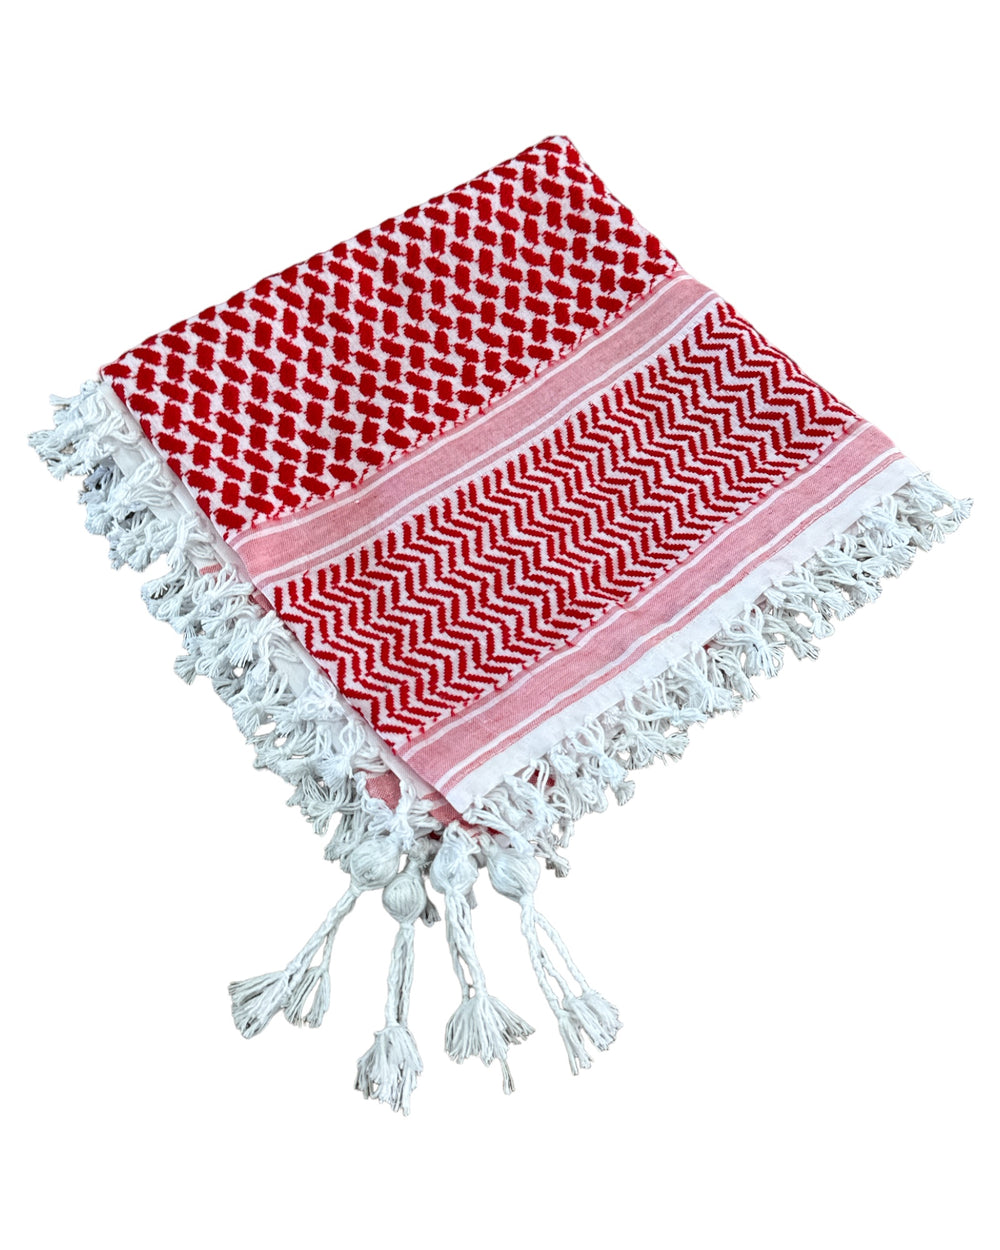 The Palestine Red & White Keffiyeh with Tarboosh – Elegance Meets Heritage